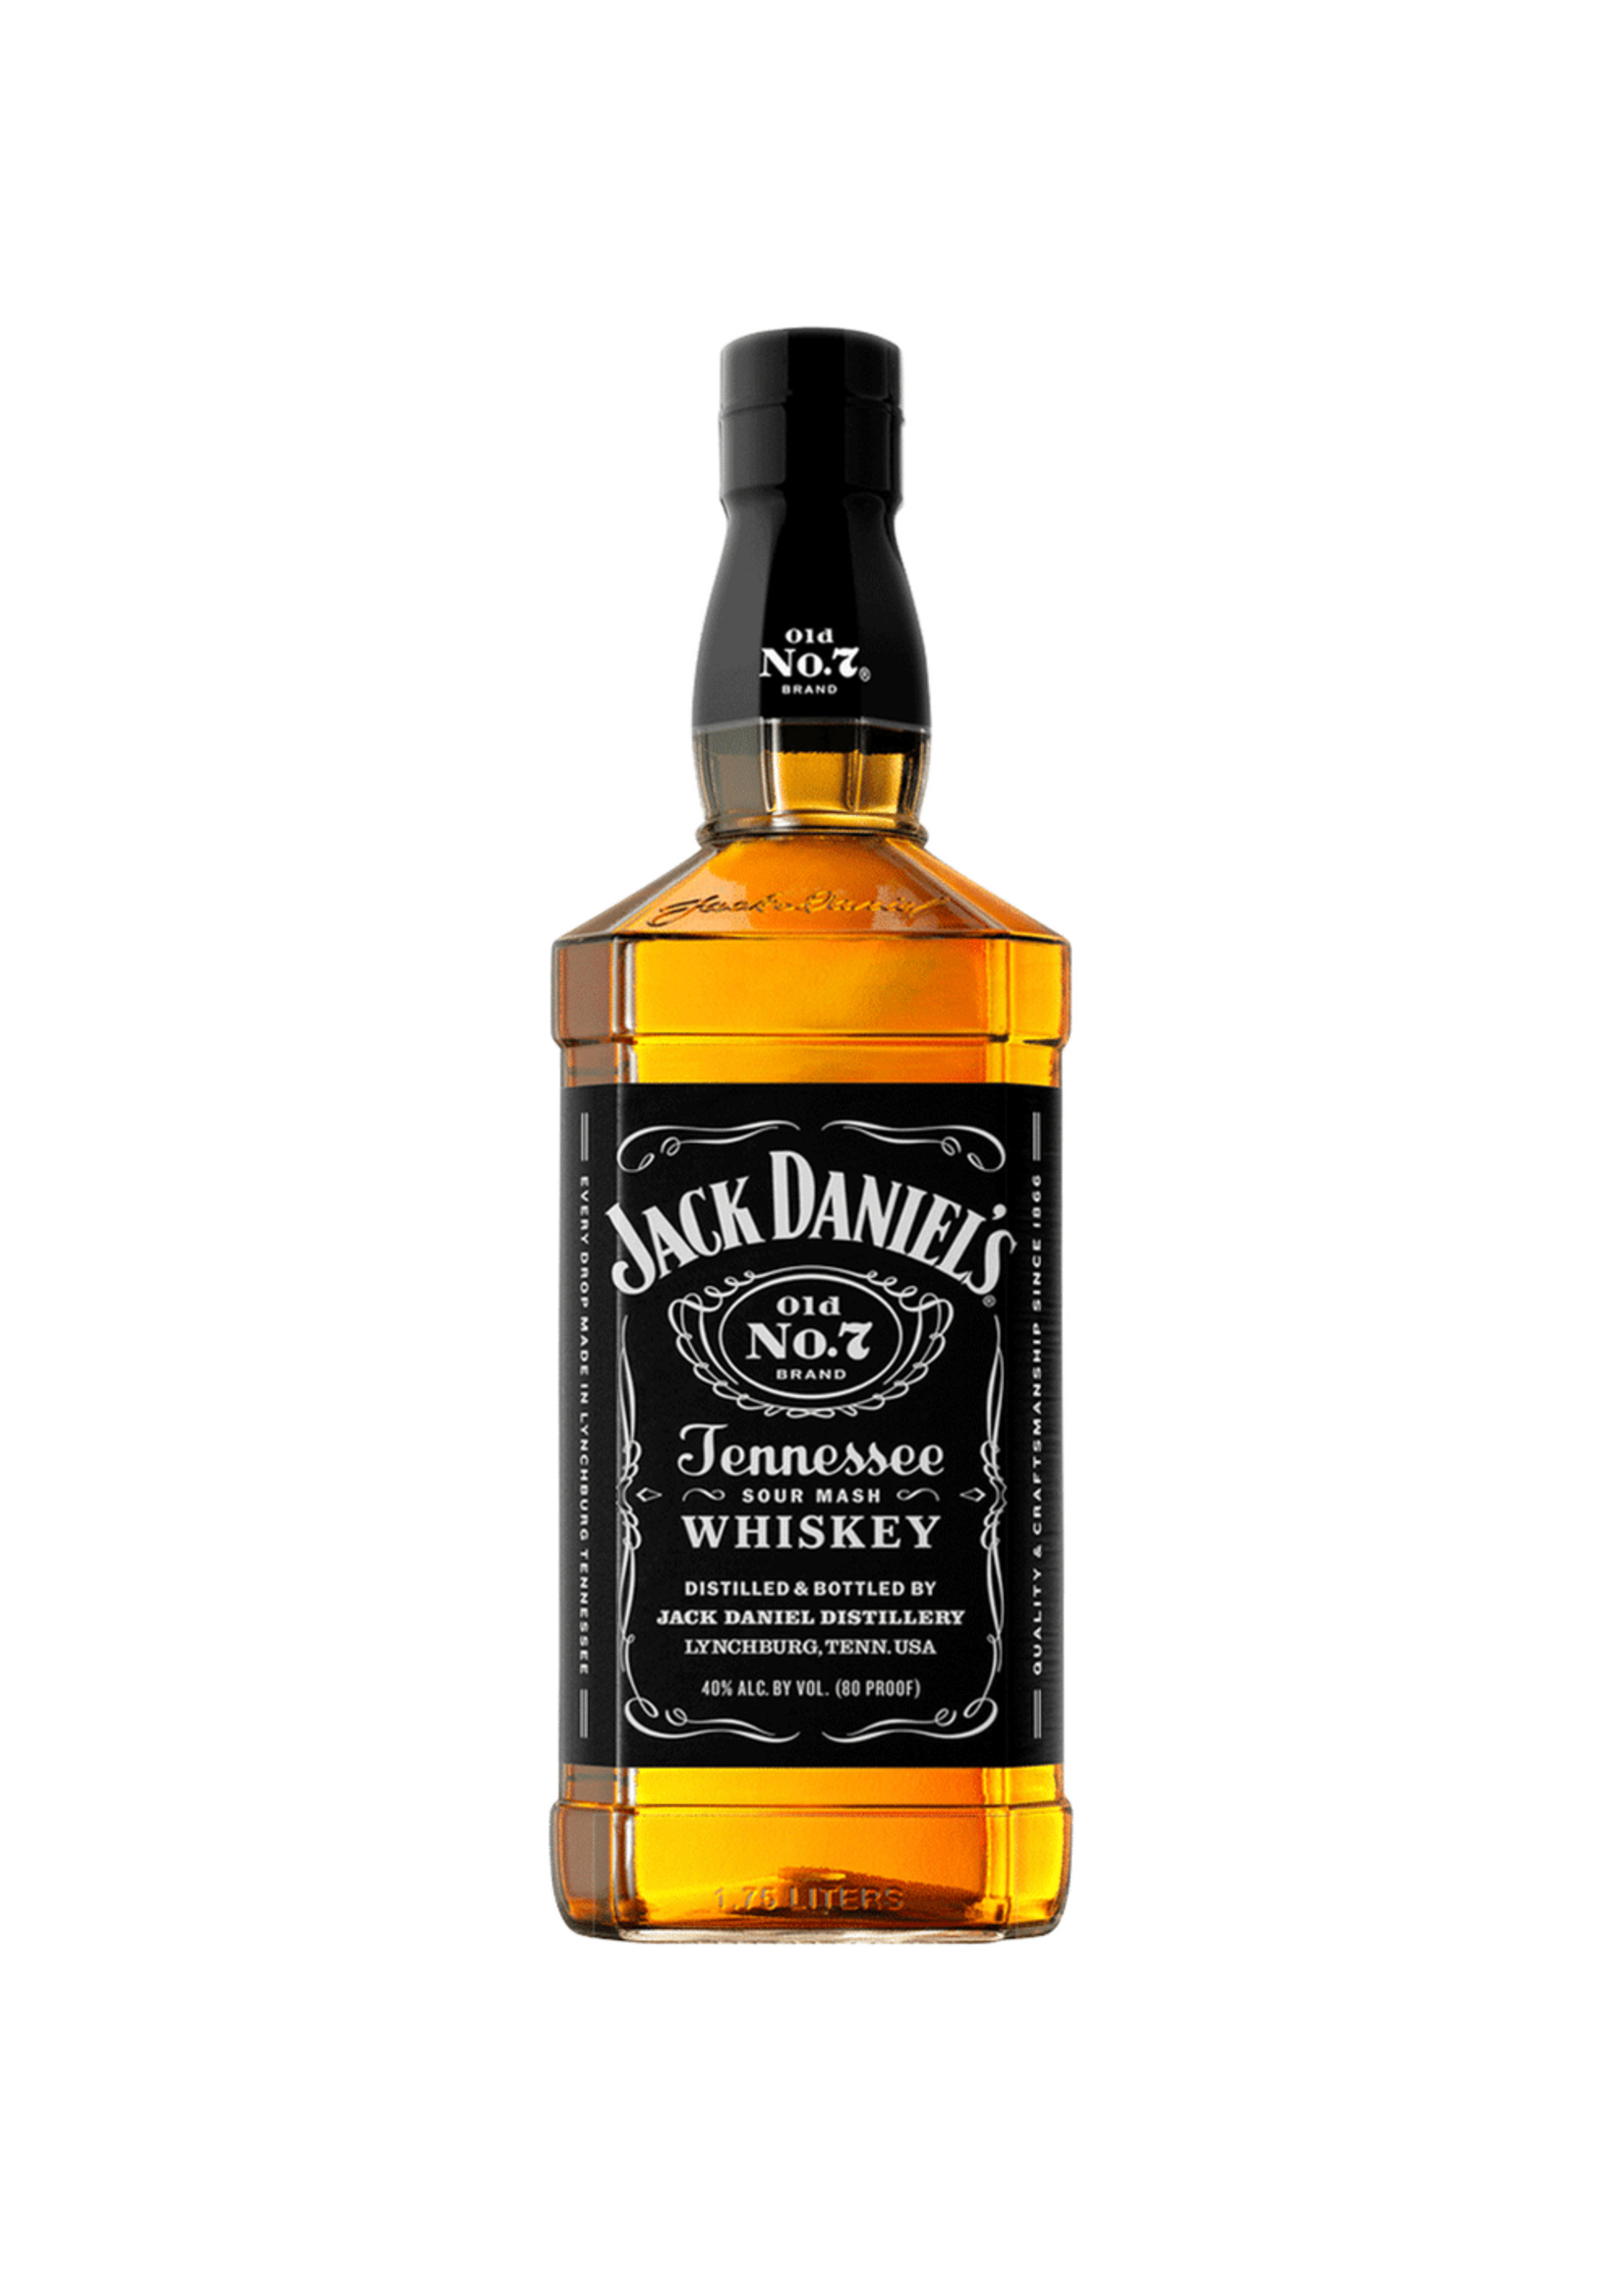 Jack Daniels Jack Daniel's Old No. 7 Tennessee Whiskey 80Proof 1.75 Ltr